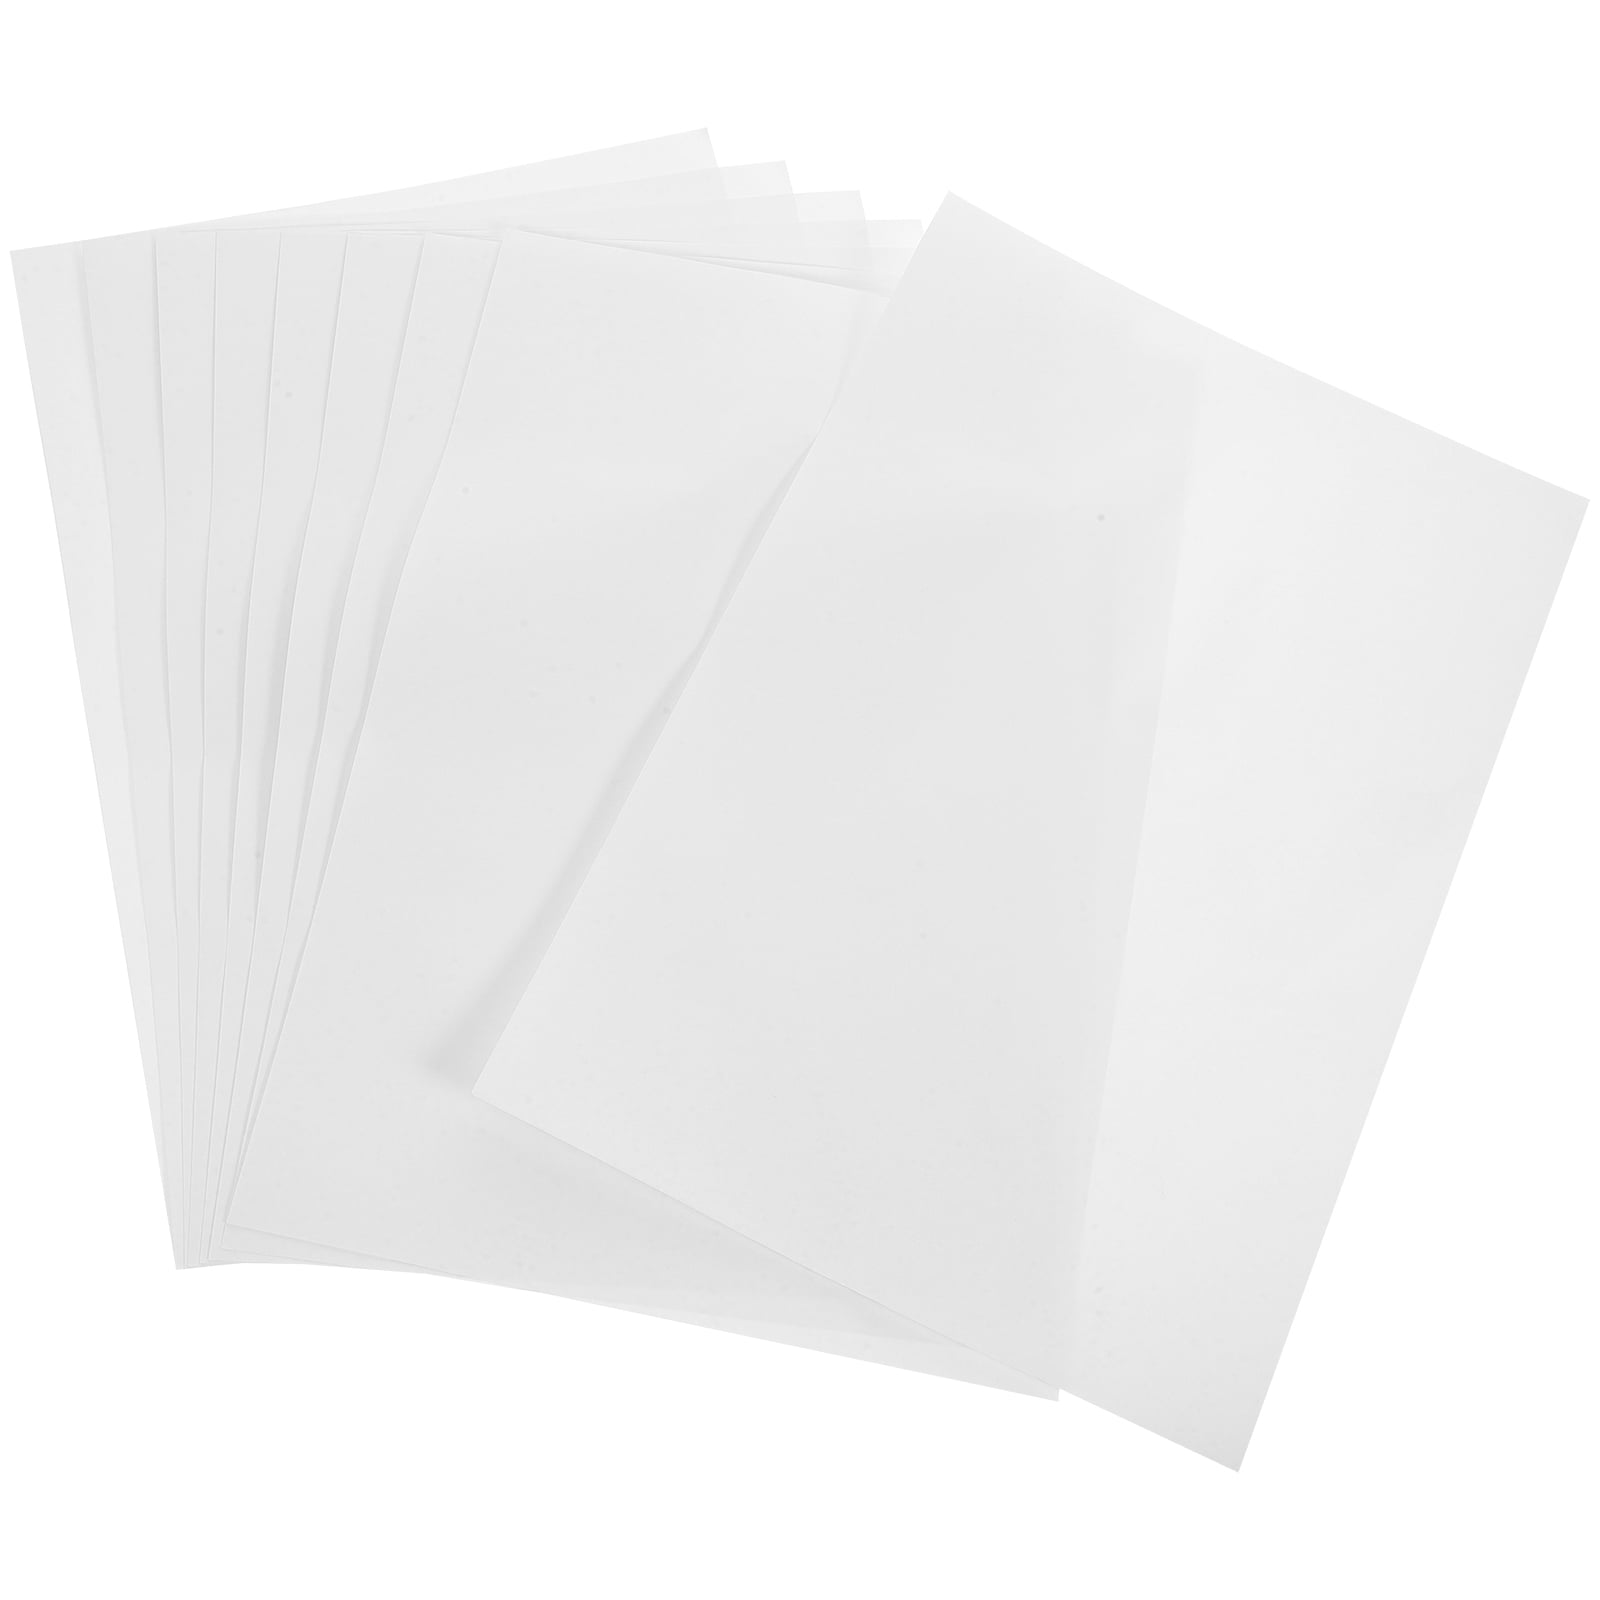 10pcs A4 waterproof printing paper Heat Transfer Print Paper